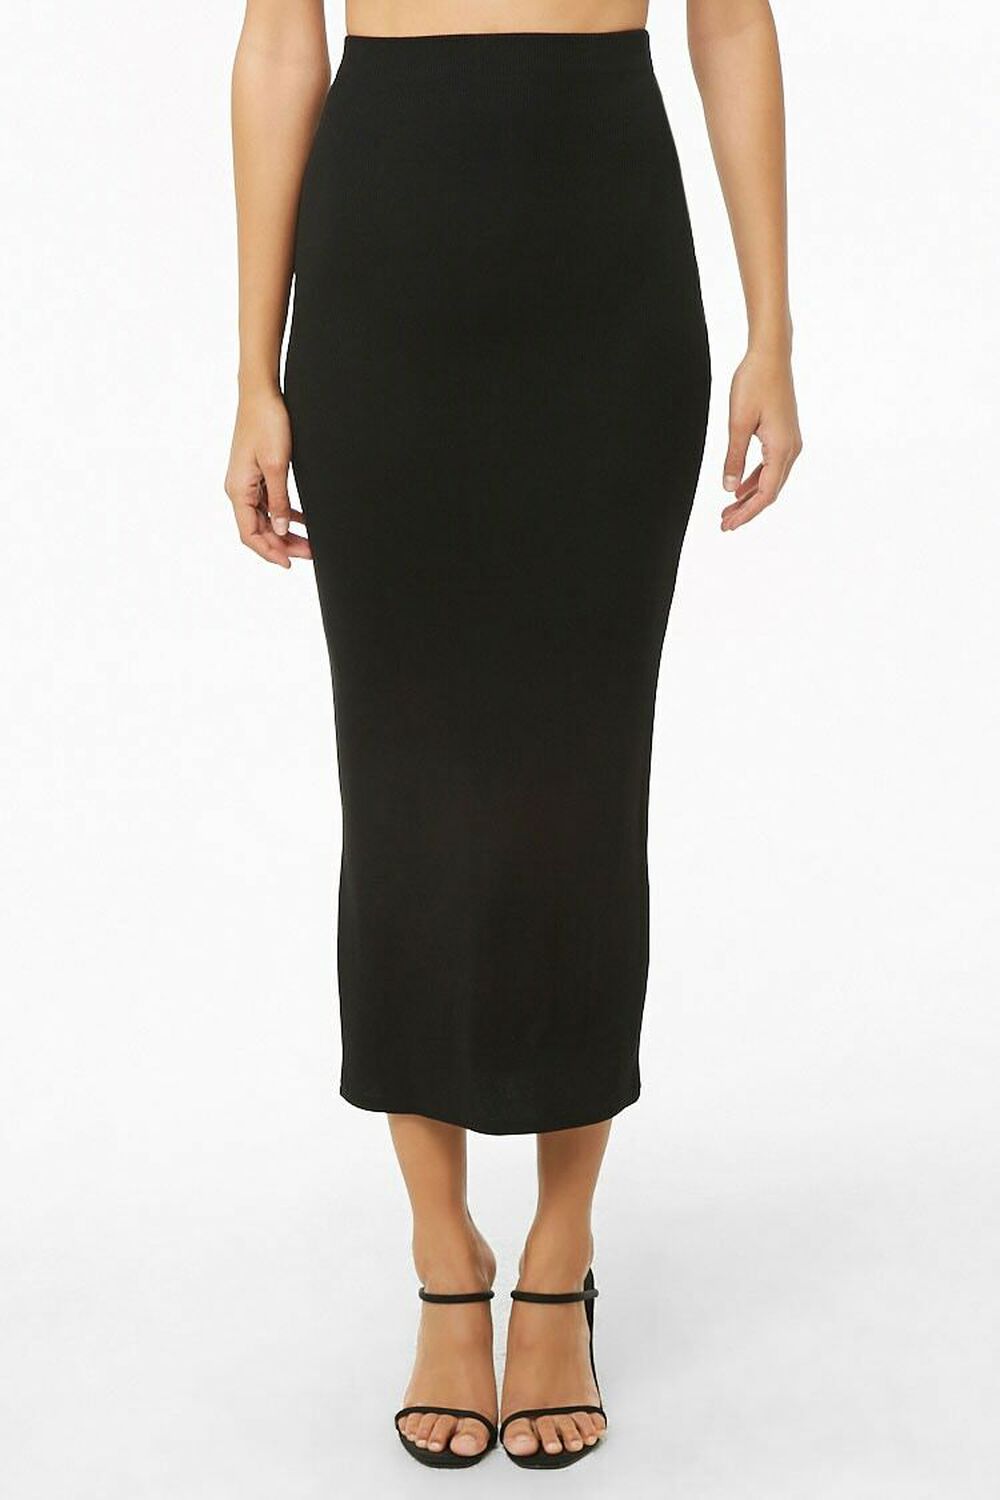 BLACK Ribbed High-Rise Midi Skirt, image 1